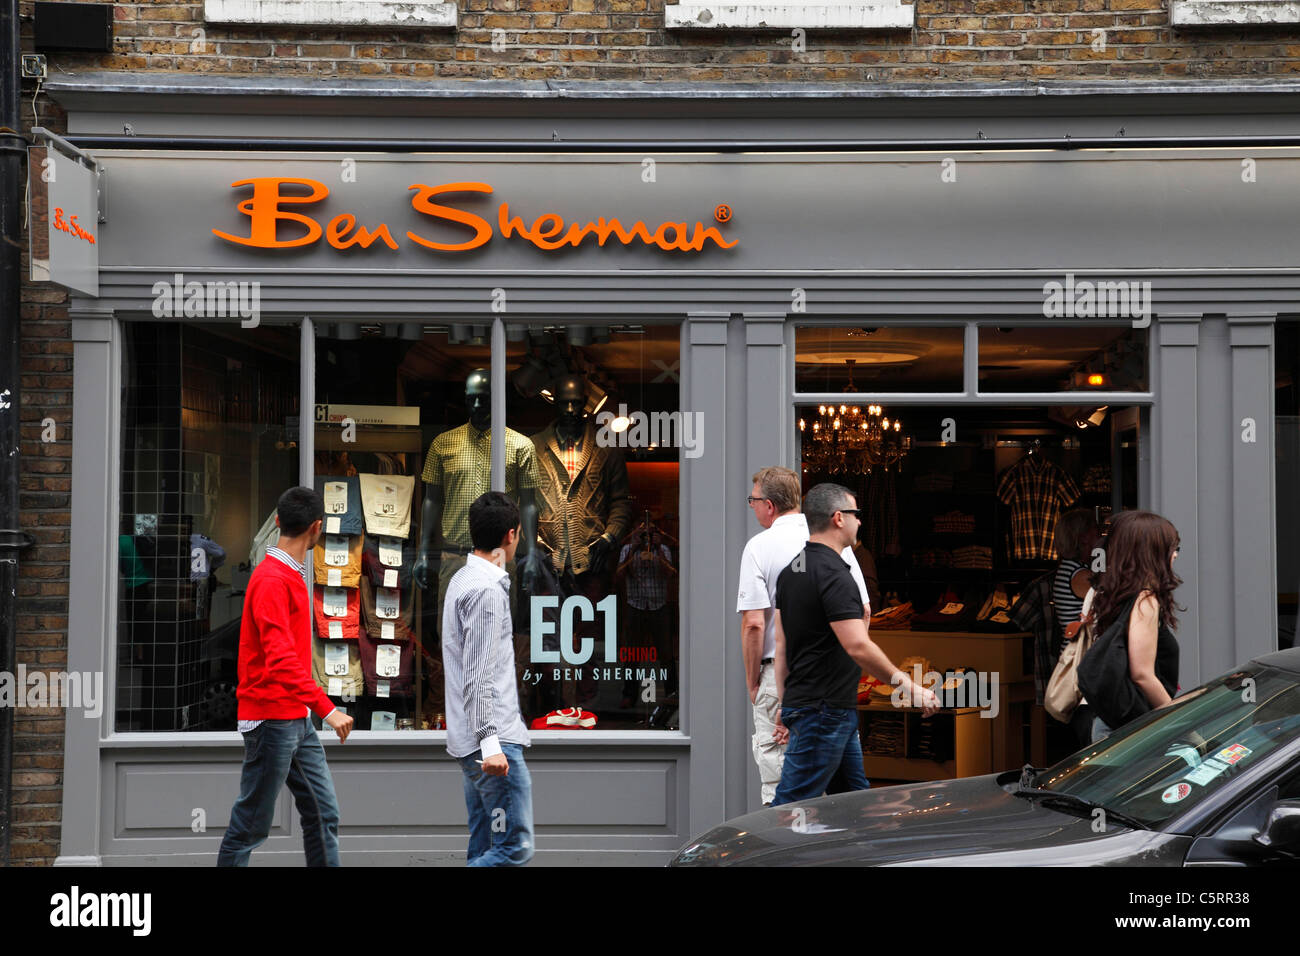 A Ben Sherman store in London, England, U.K Stock Photo - Alamy